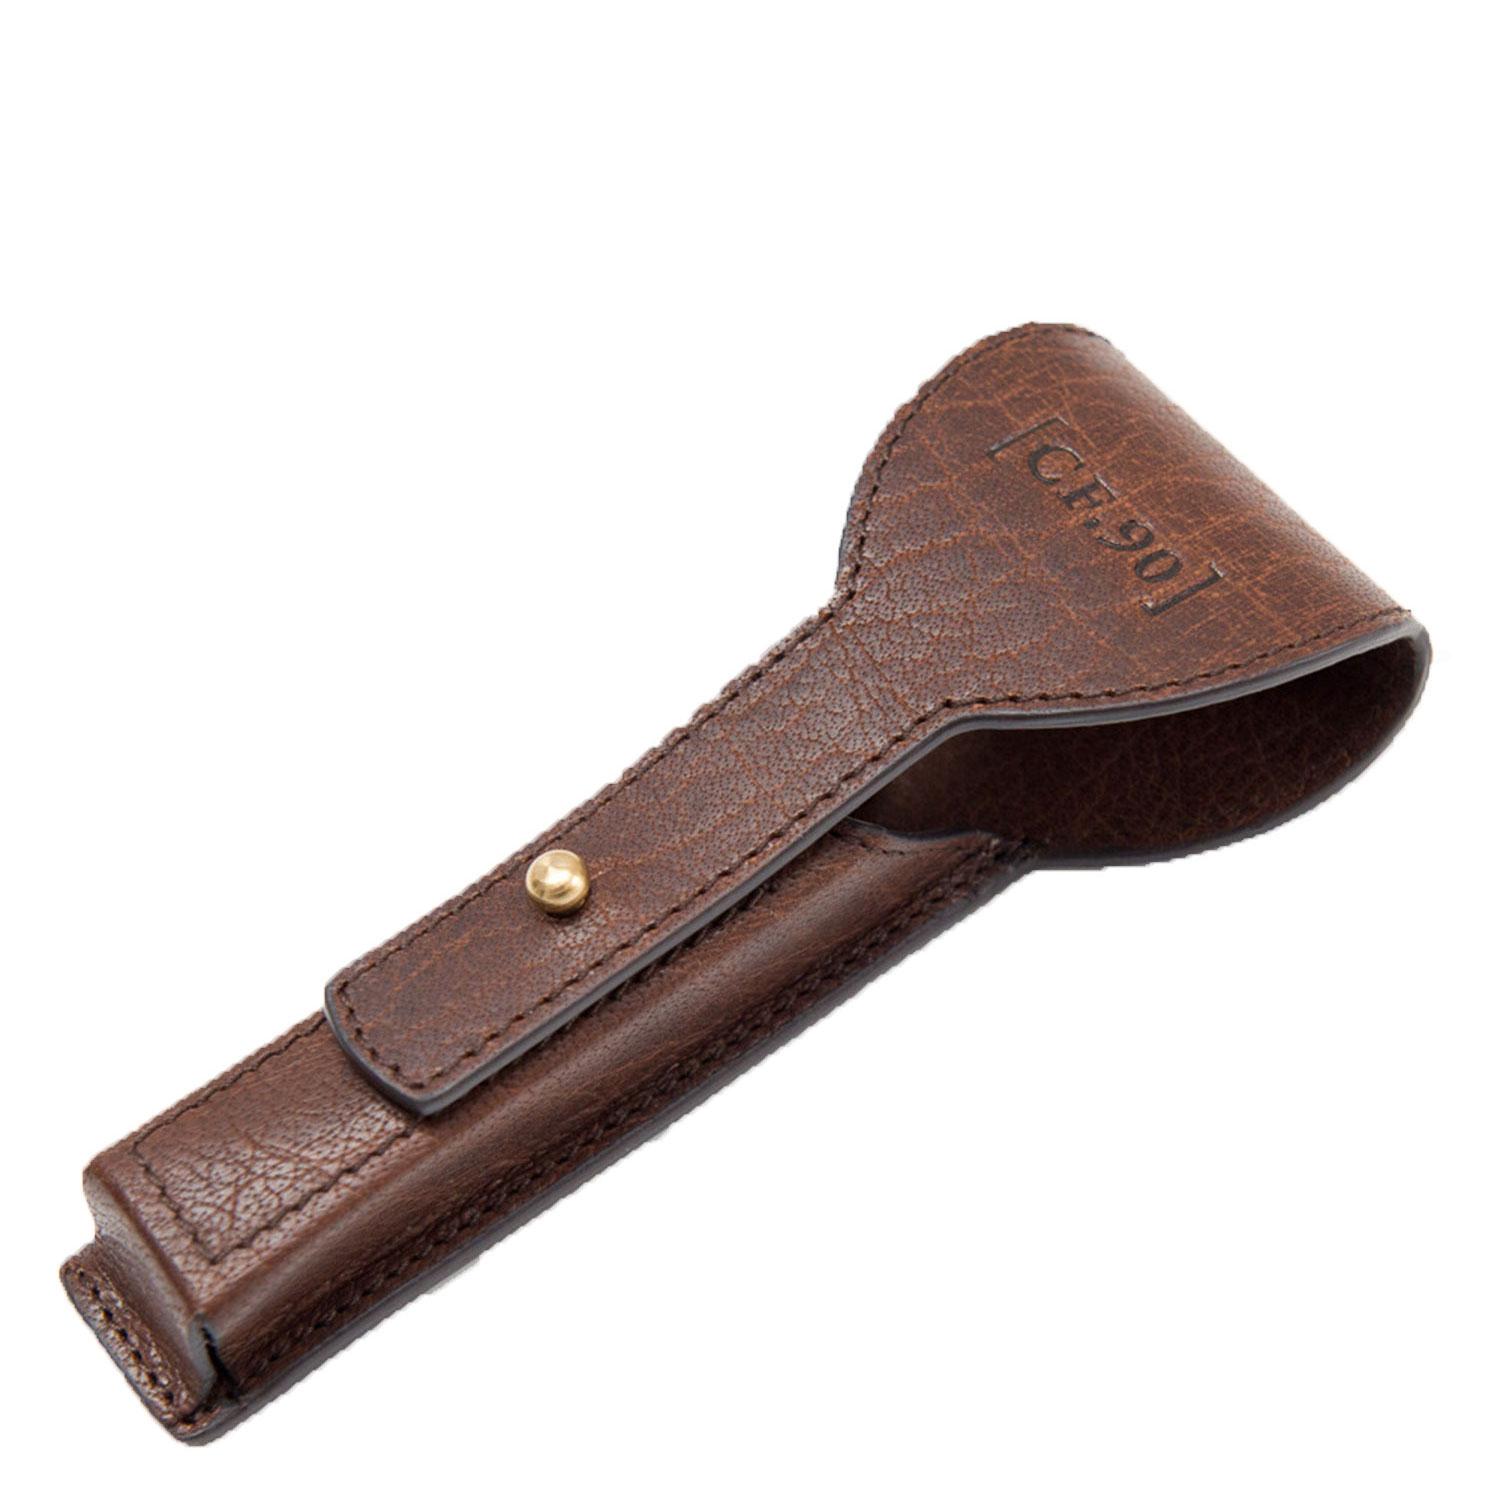 Capt. Fawcett Tools - Handcrafted Leather Razor Case